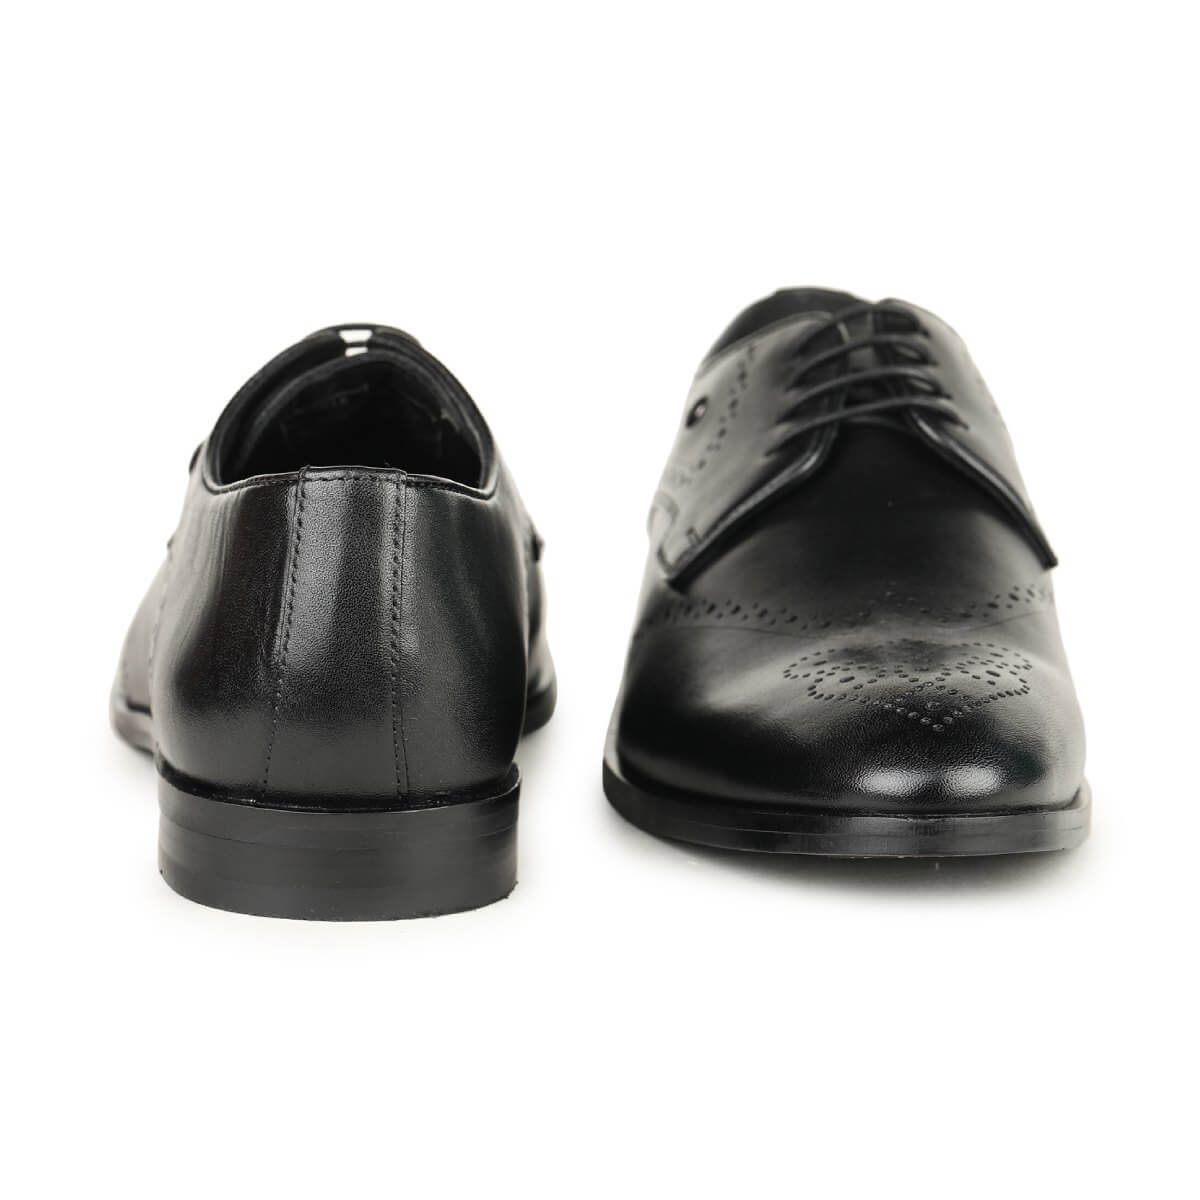 Black Brogue Shoes for Men_7